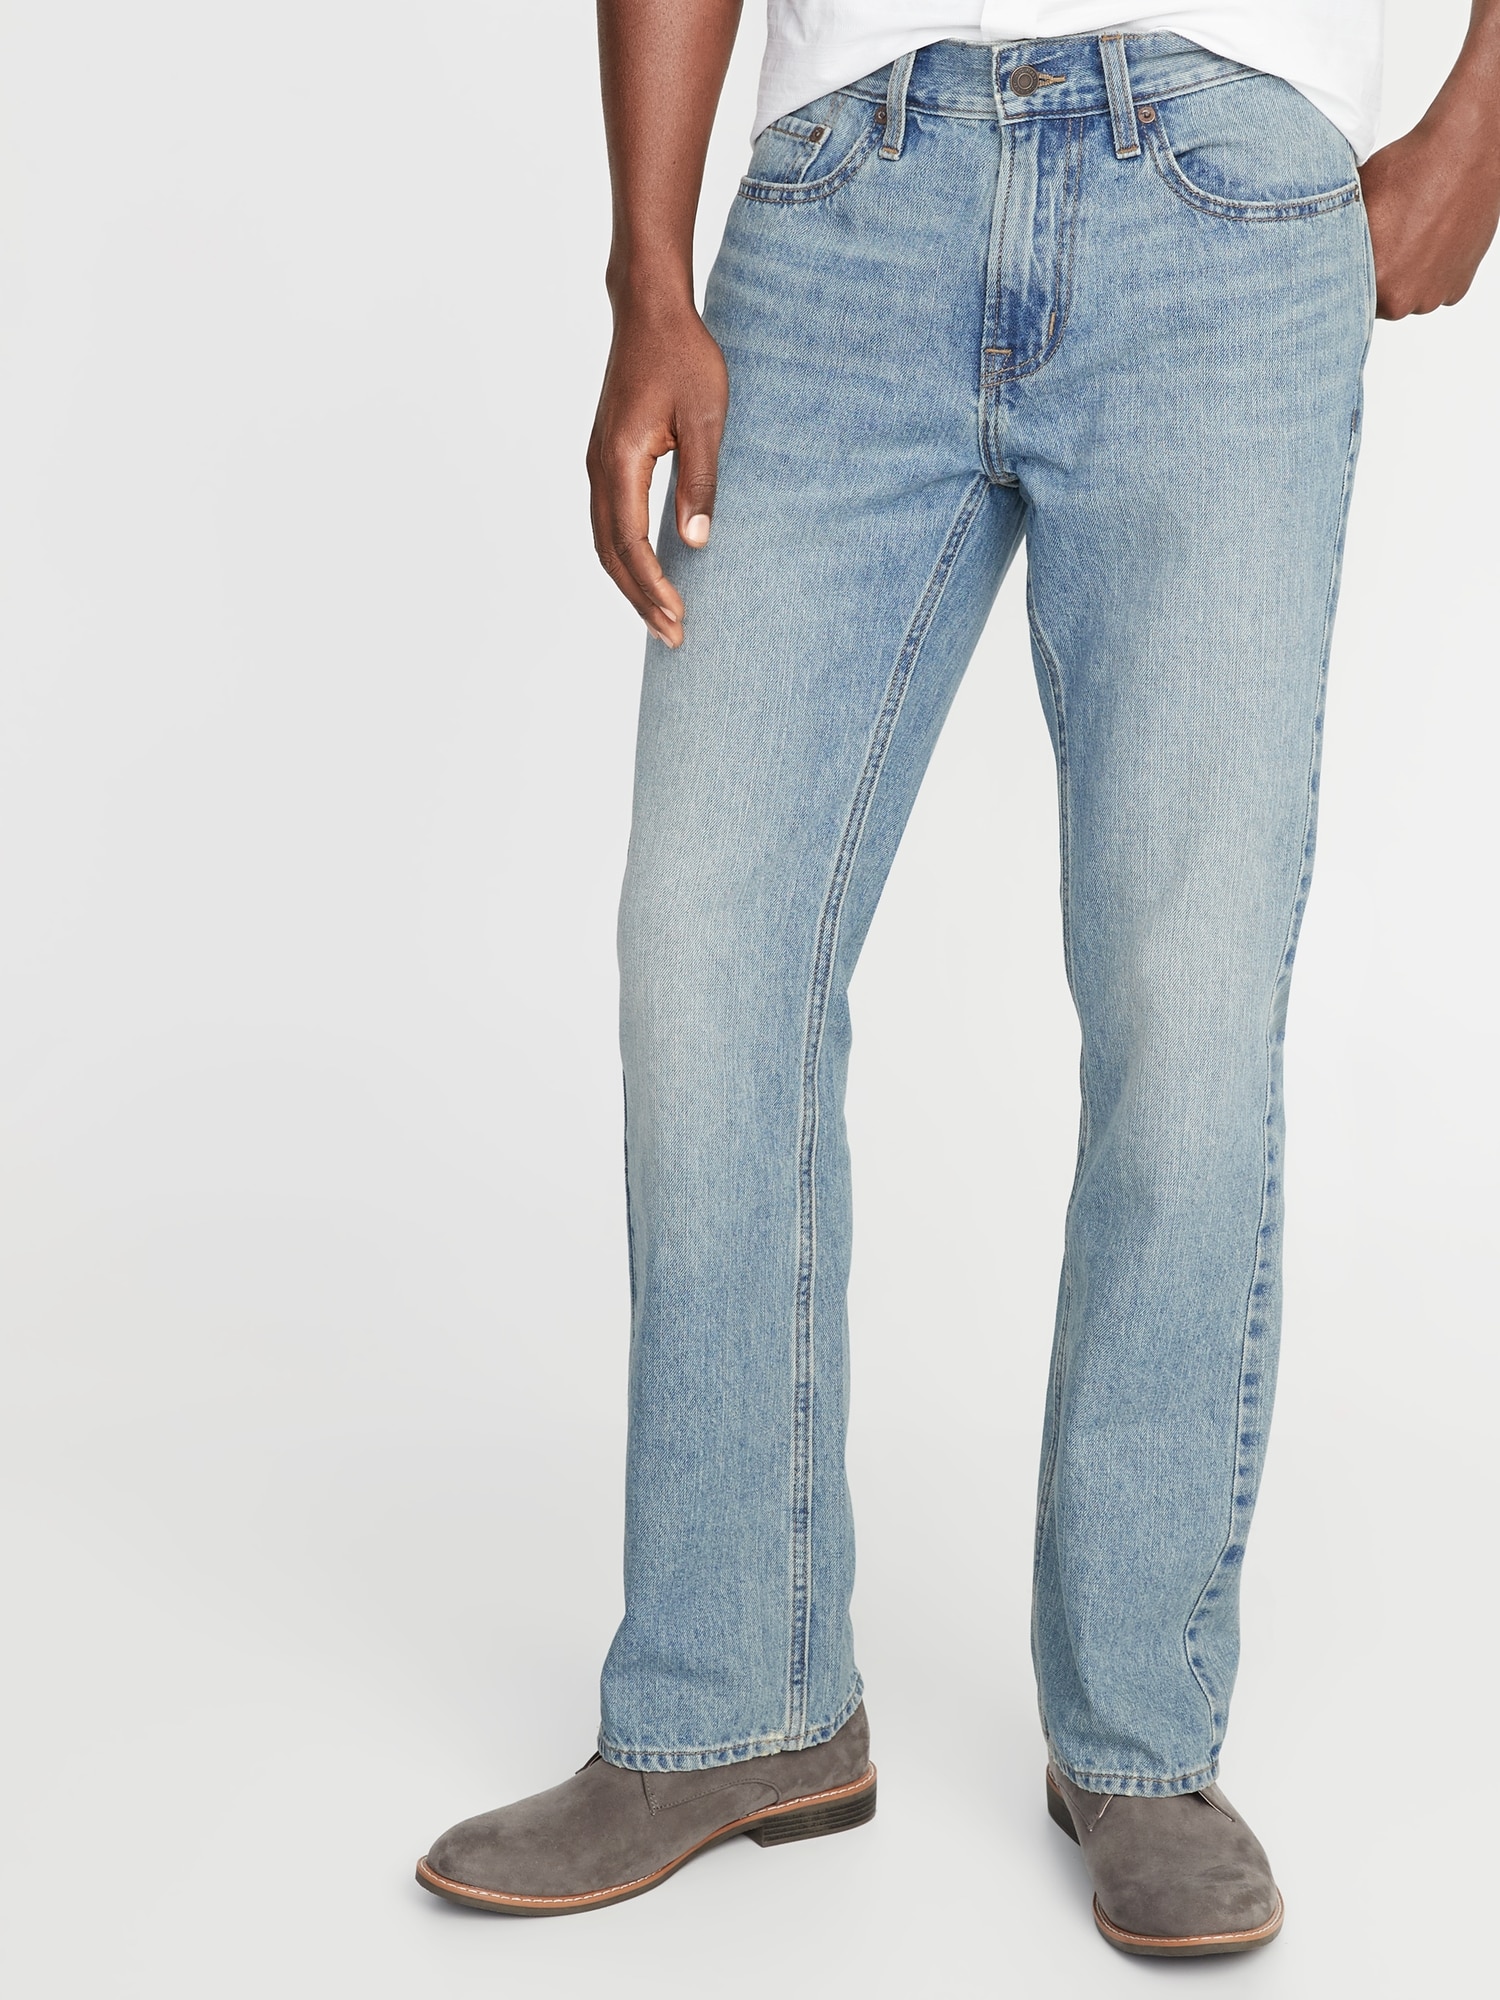 gap boot fit jeans mens